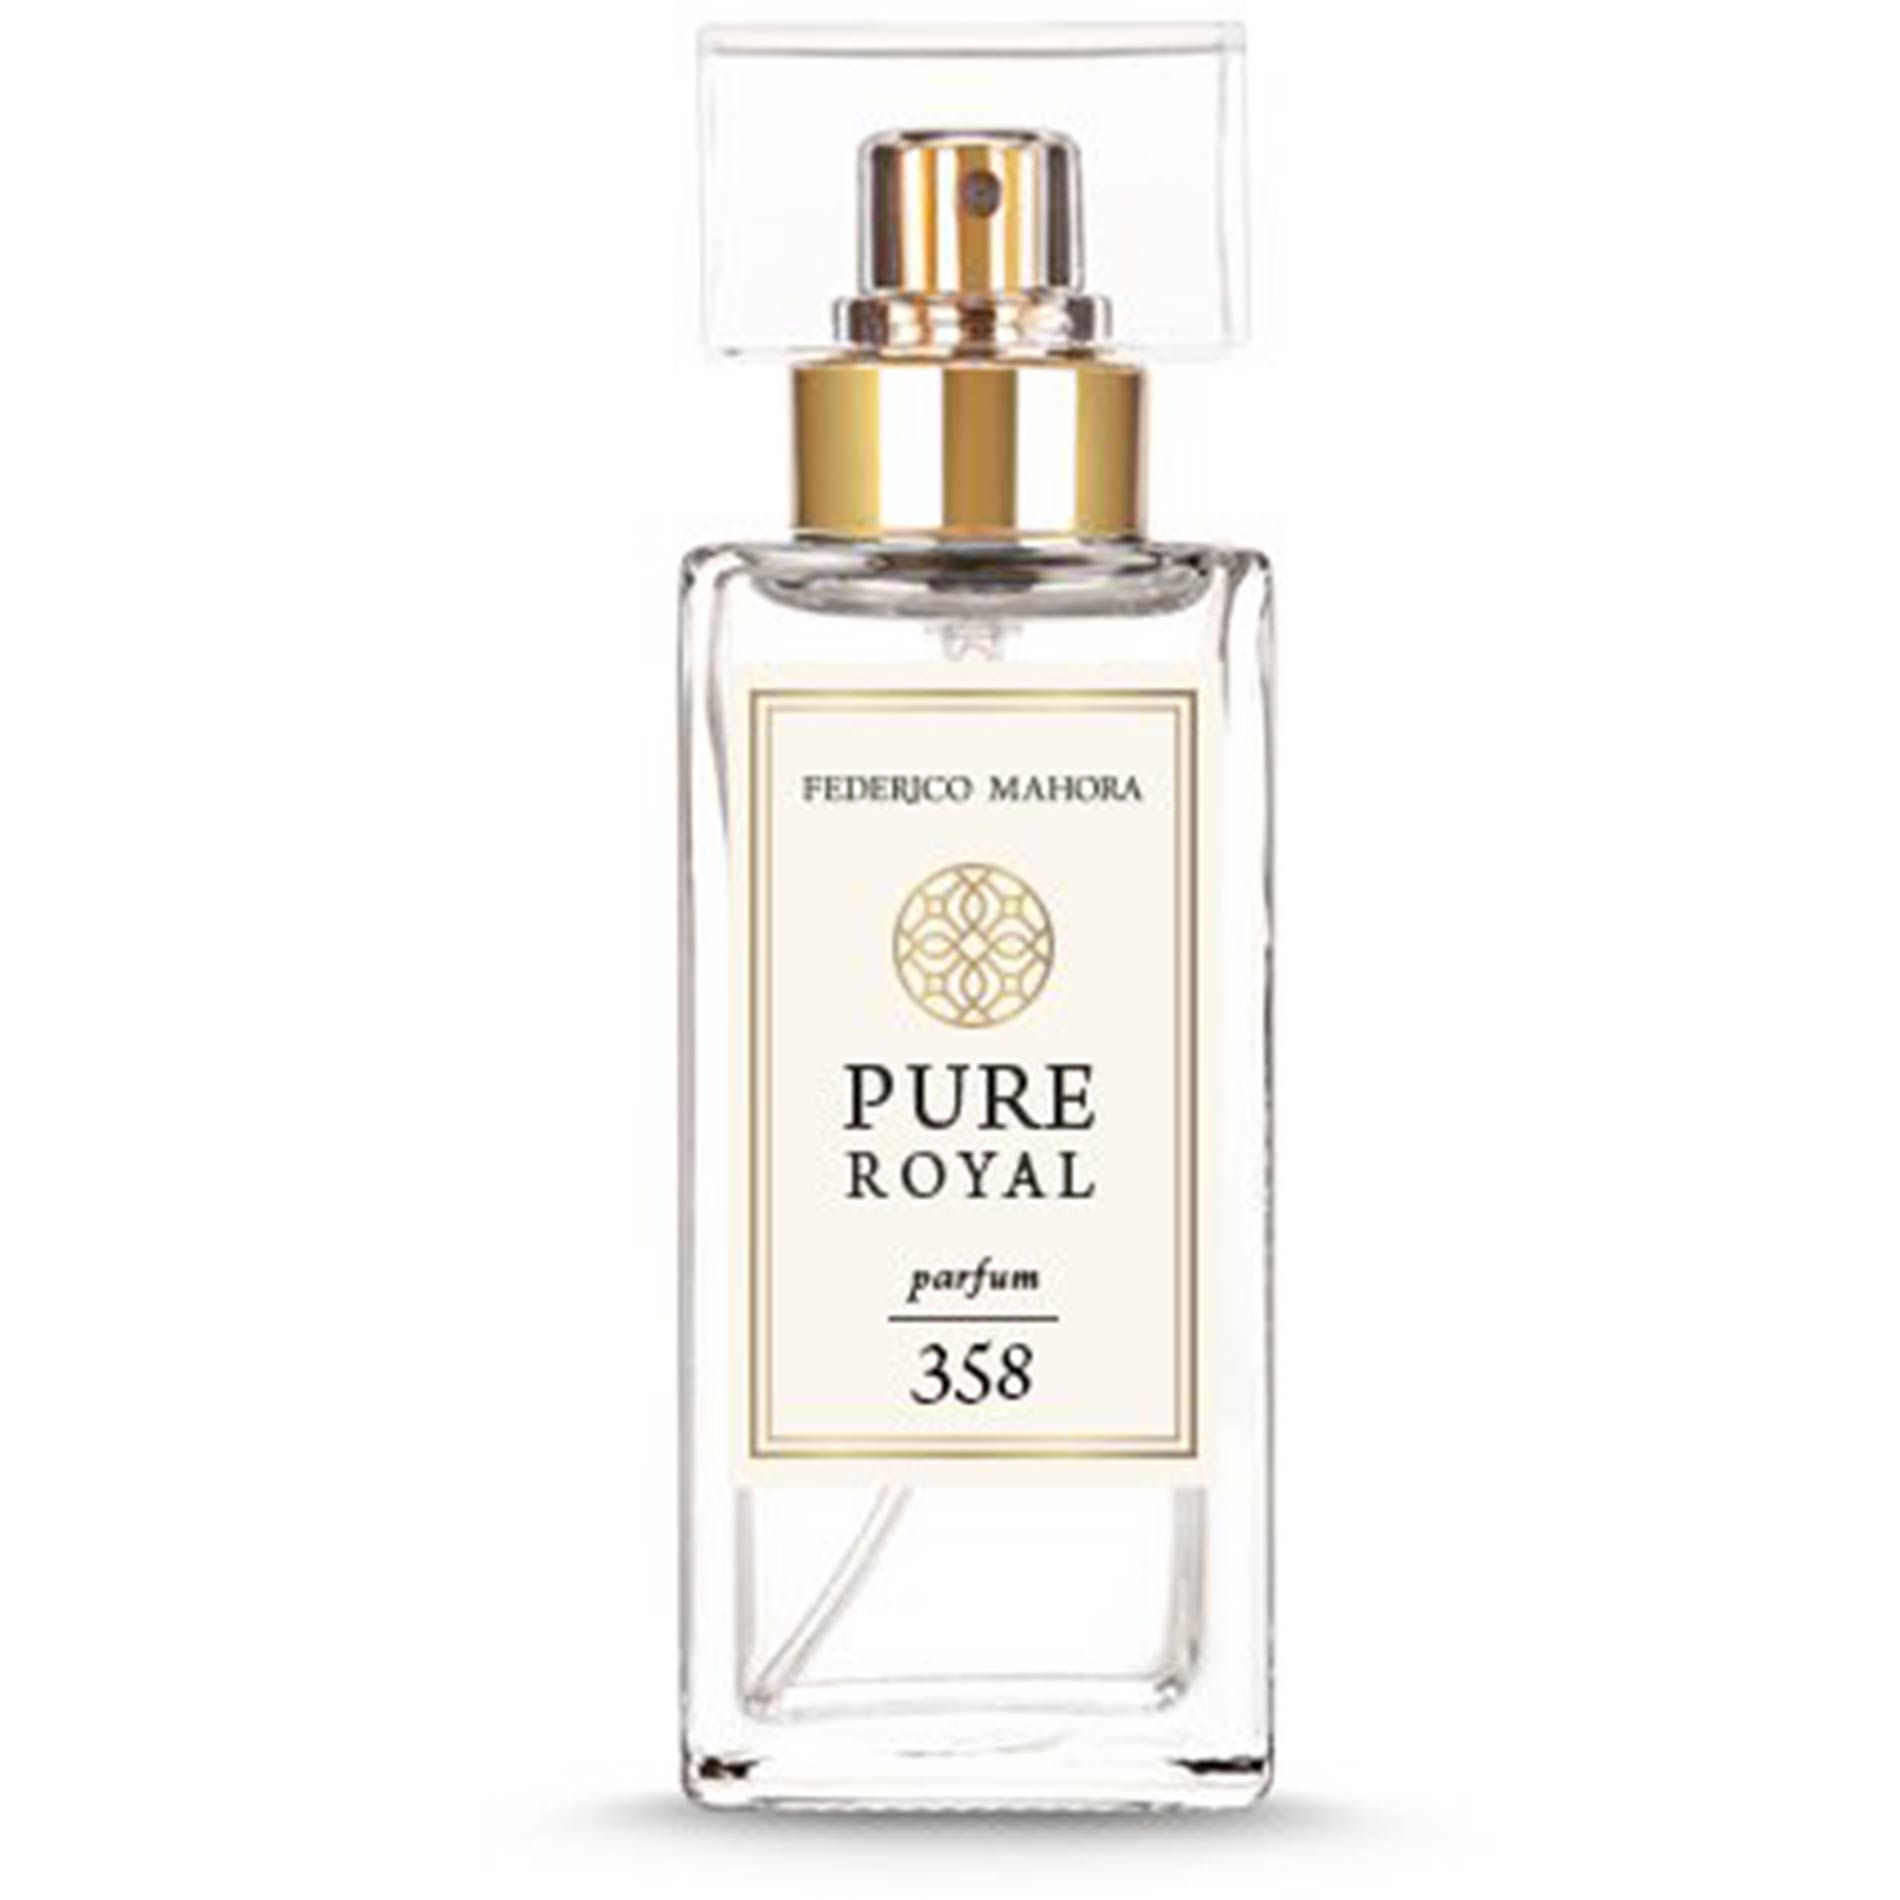 PURE ROYAL 358 Parfum Federico Mahora 